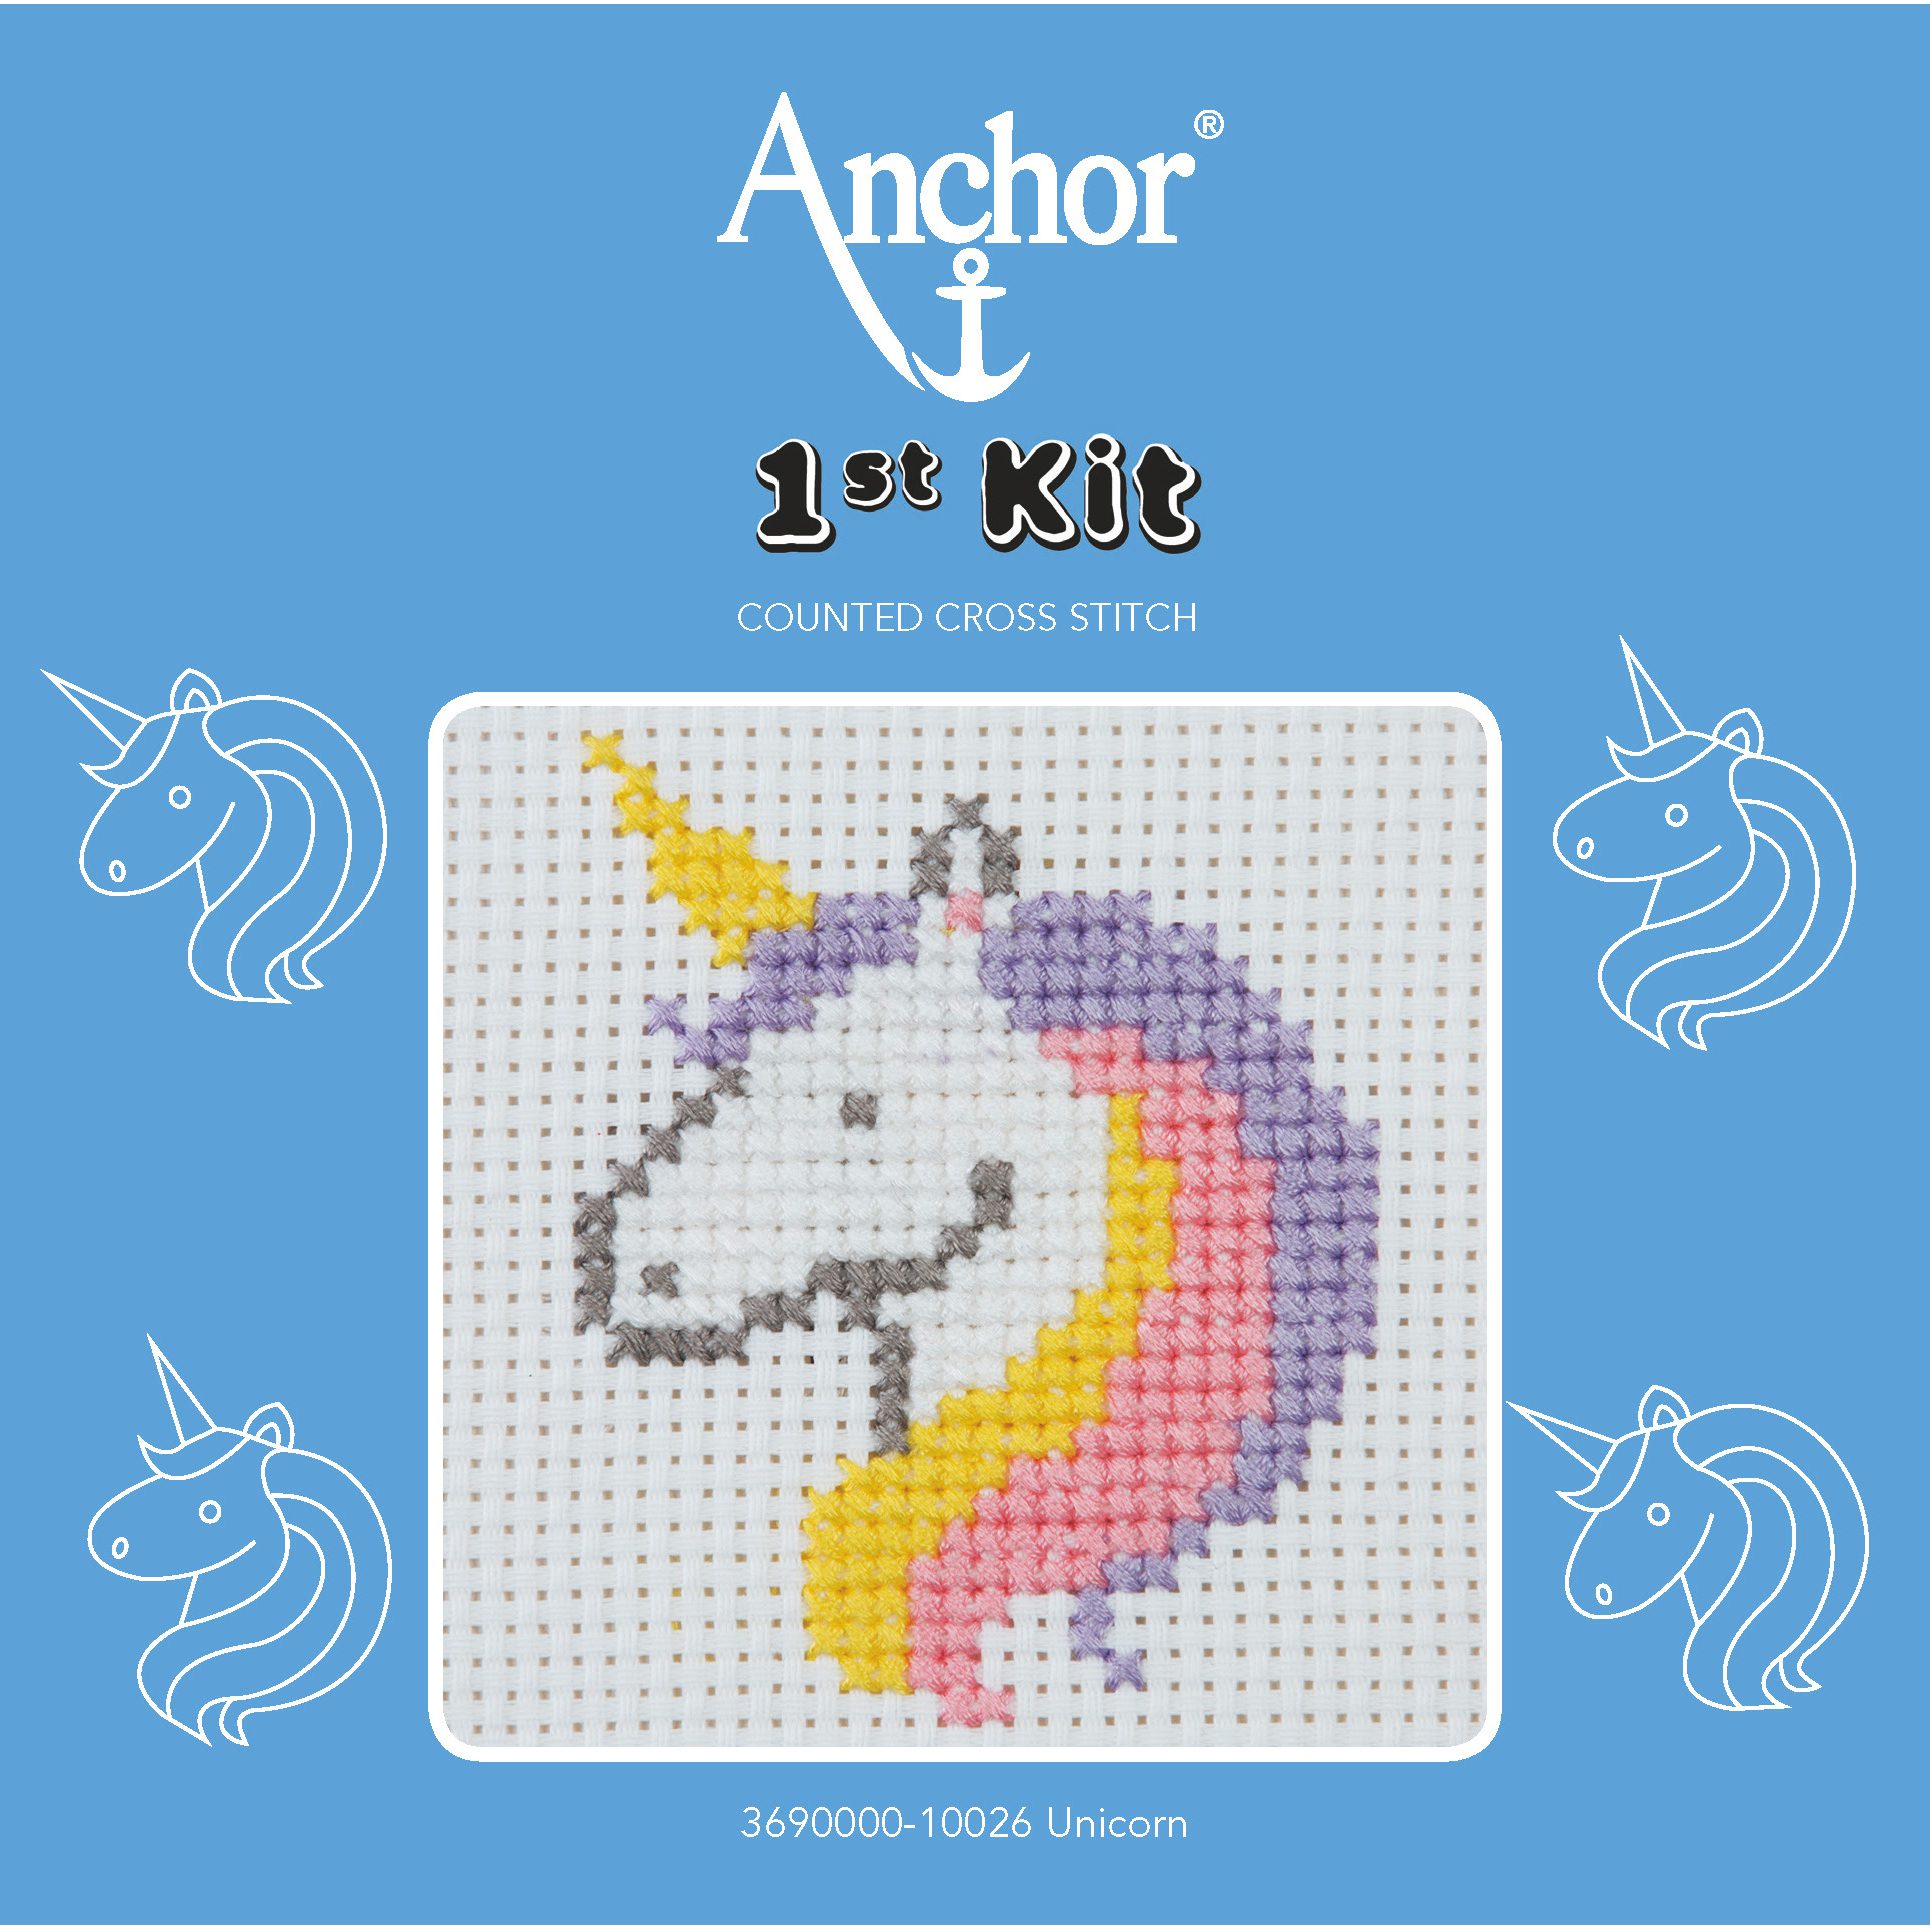 Anchor 1st Counted Cross Stitch Kit - Unicorn product image